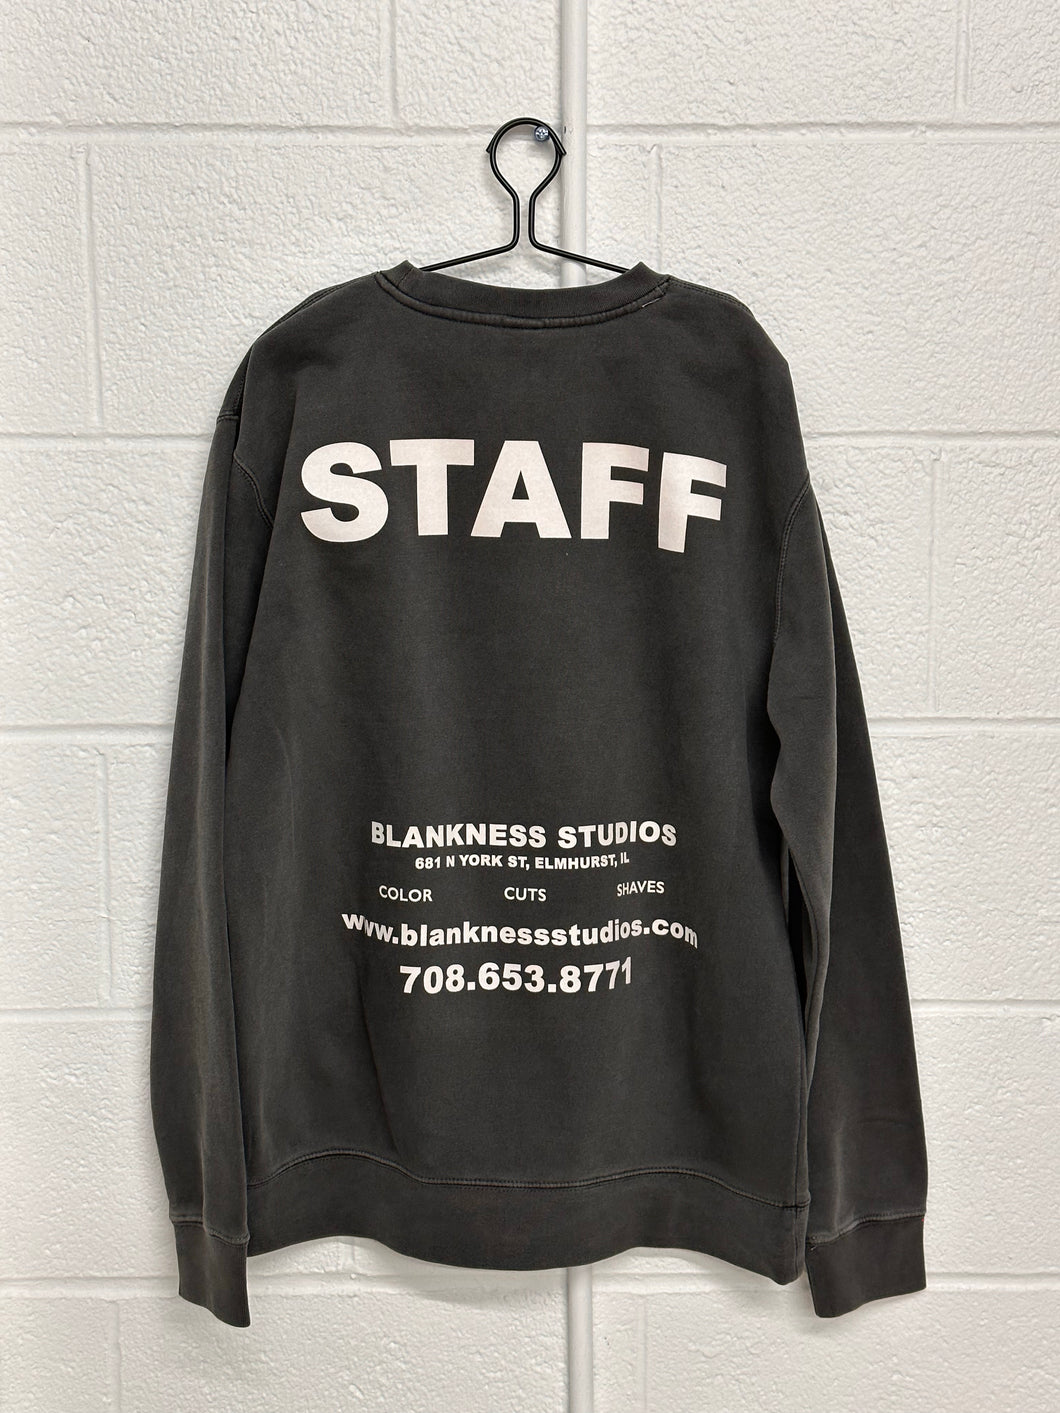 Staff Crewneck Sweatshirt